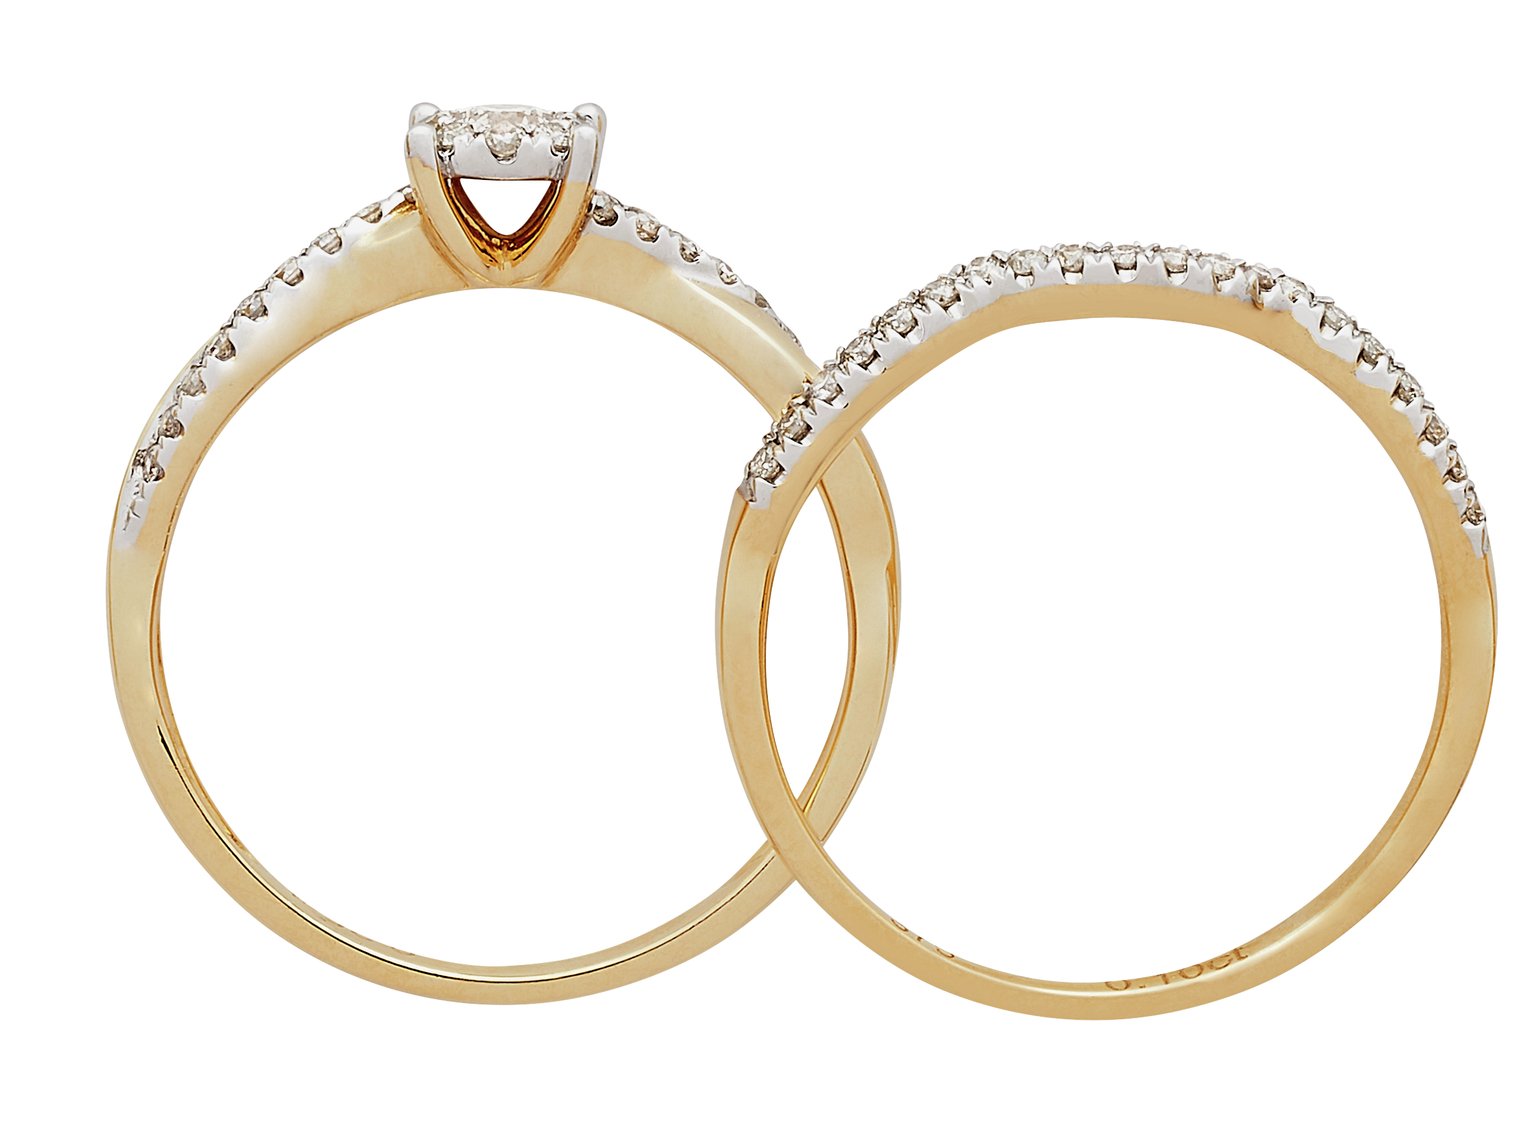 Revere 9ct Gold 0.35ct tw Diamond Bridal Ring Set Review